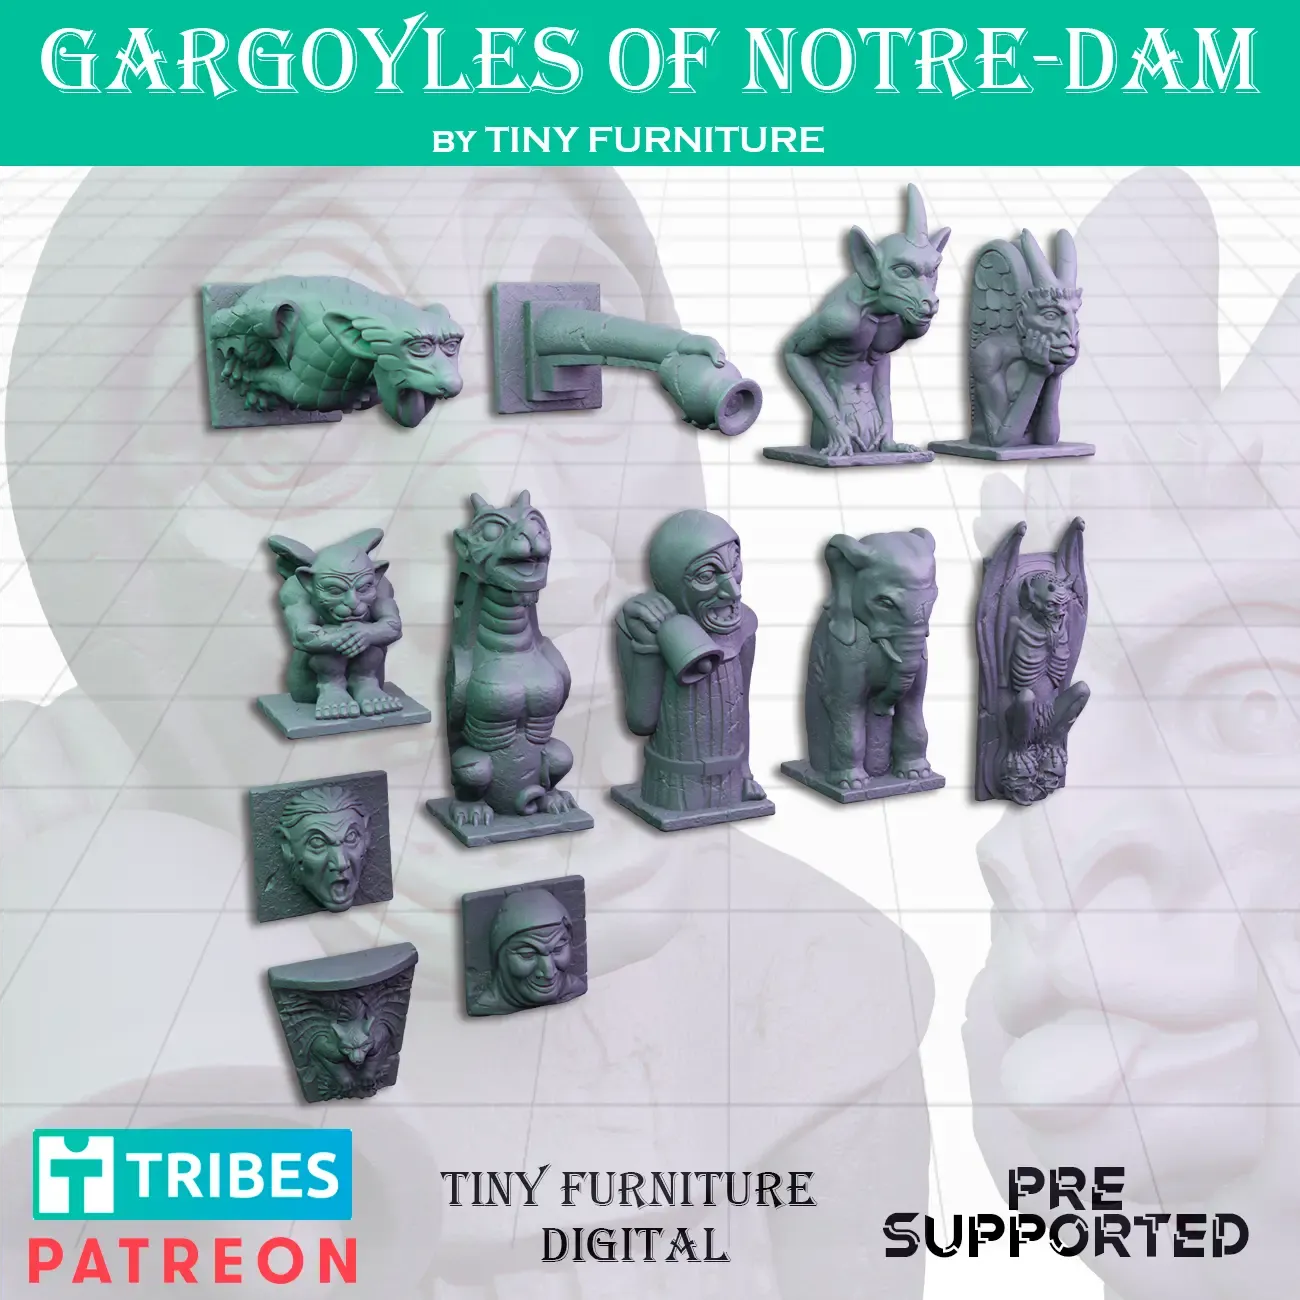 Gargoyles of Notre-Dam